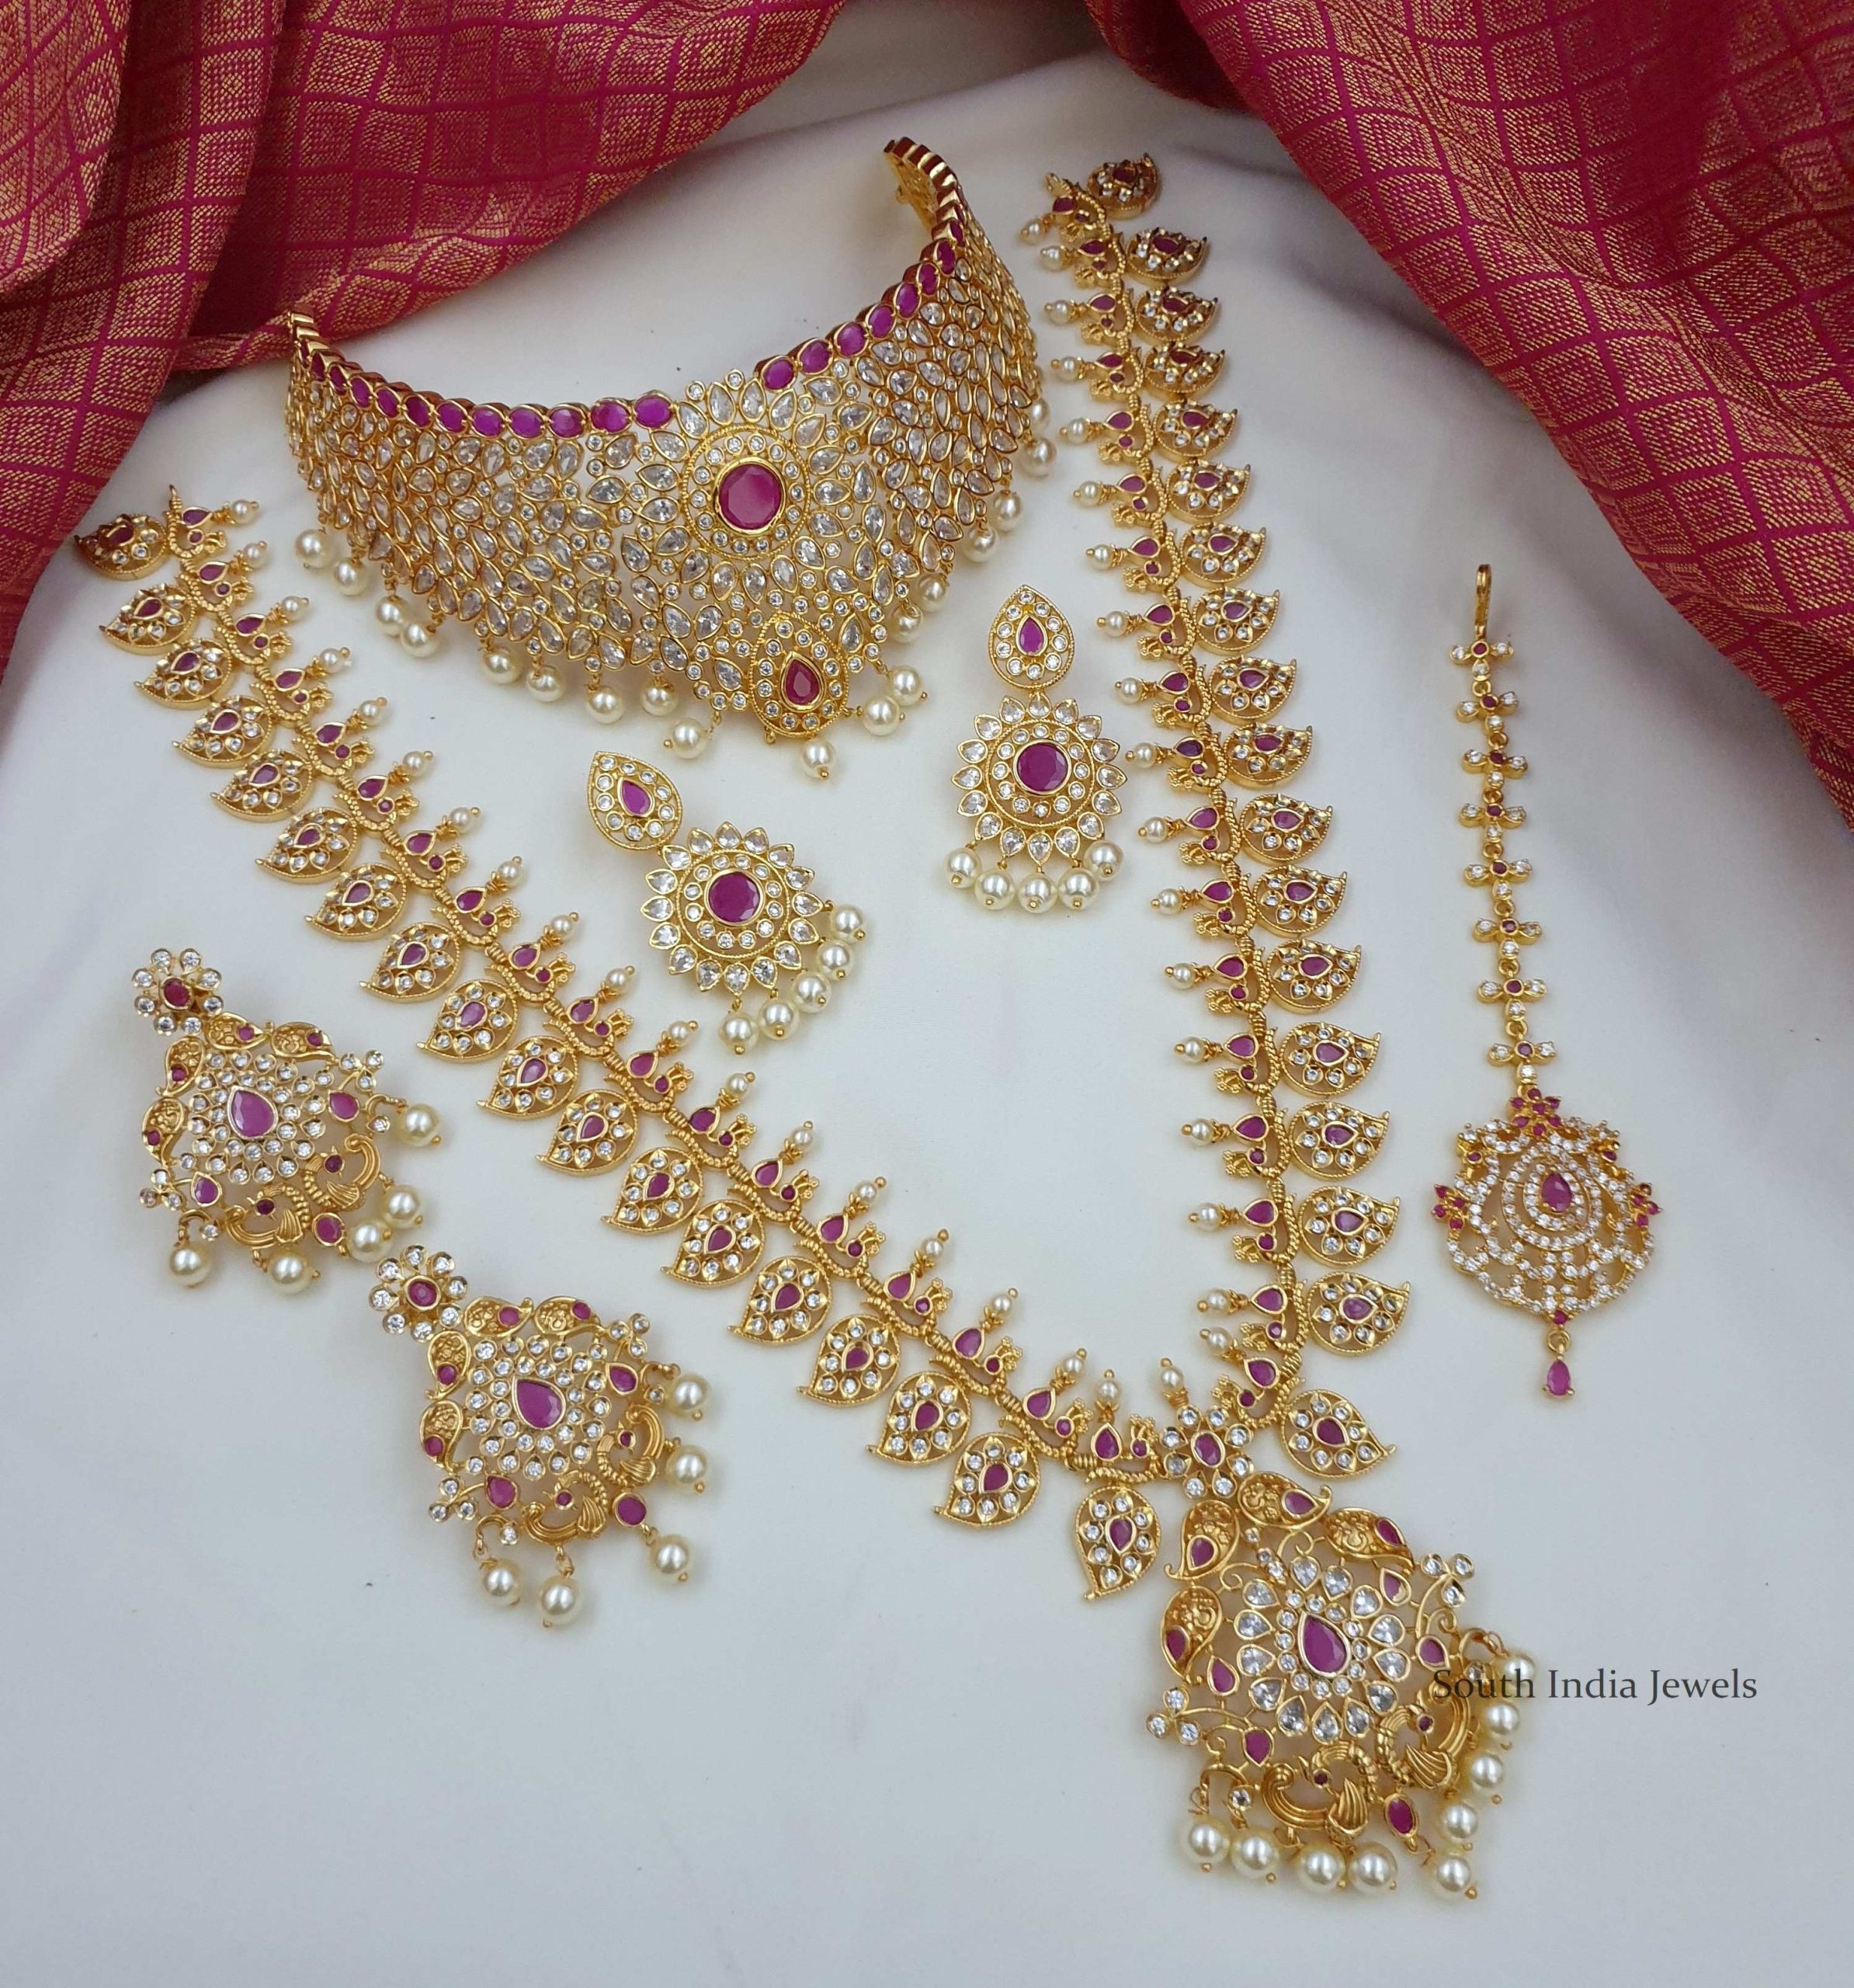 Indian Jewellery Designers | Jewellery Set - South India Jewels